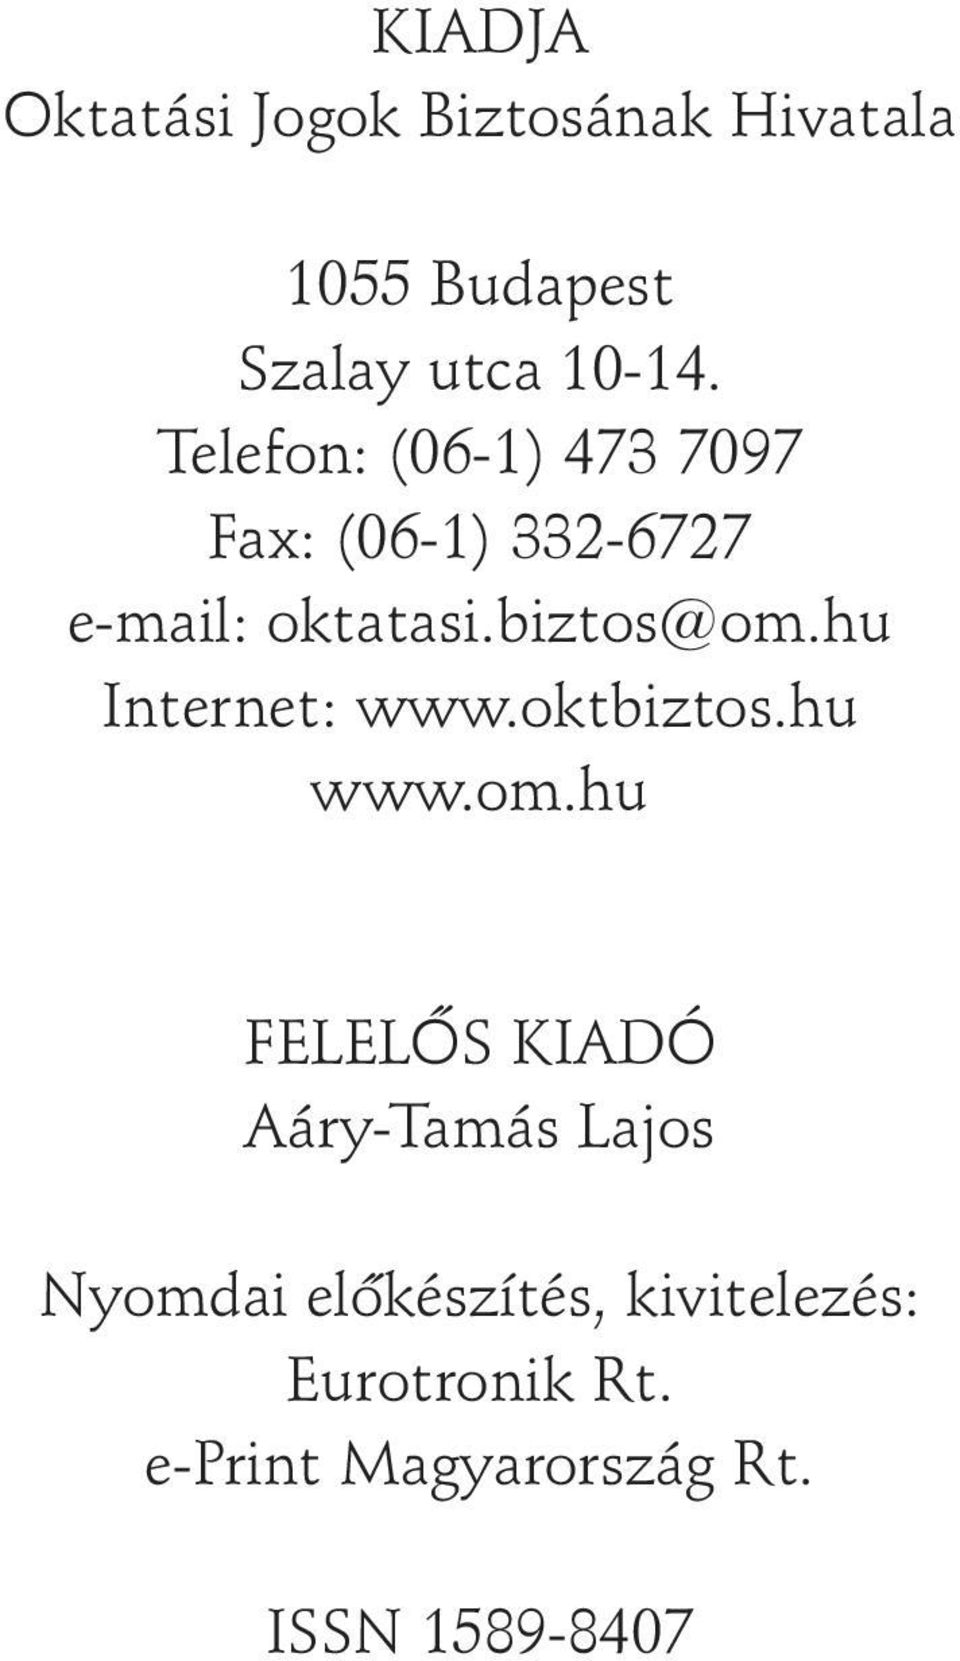 hu Internet: www.oktbiztos.hu www.om.